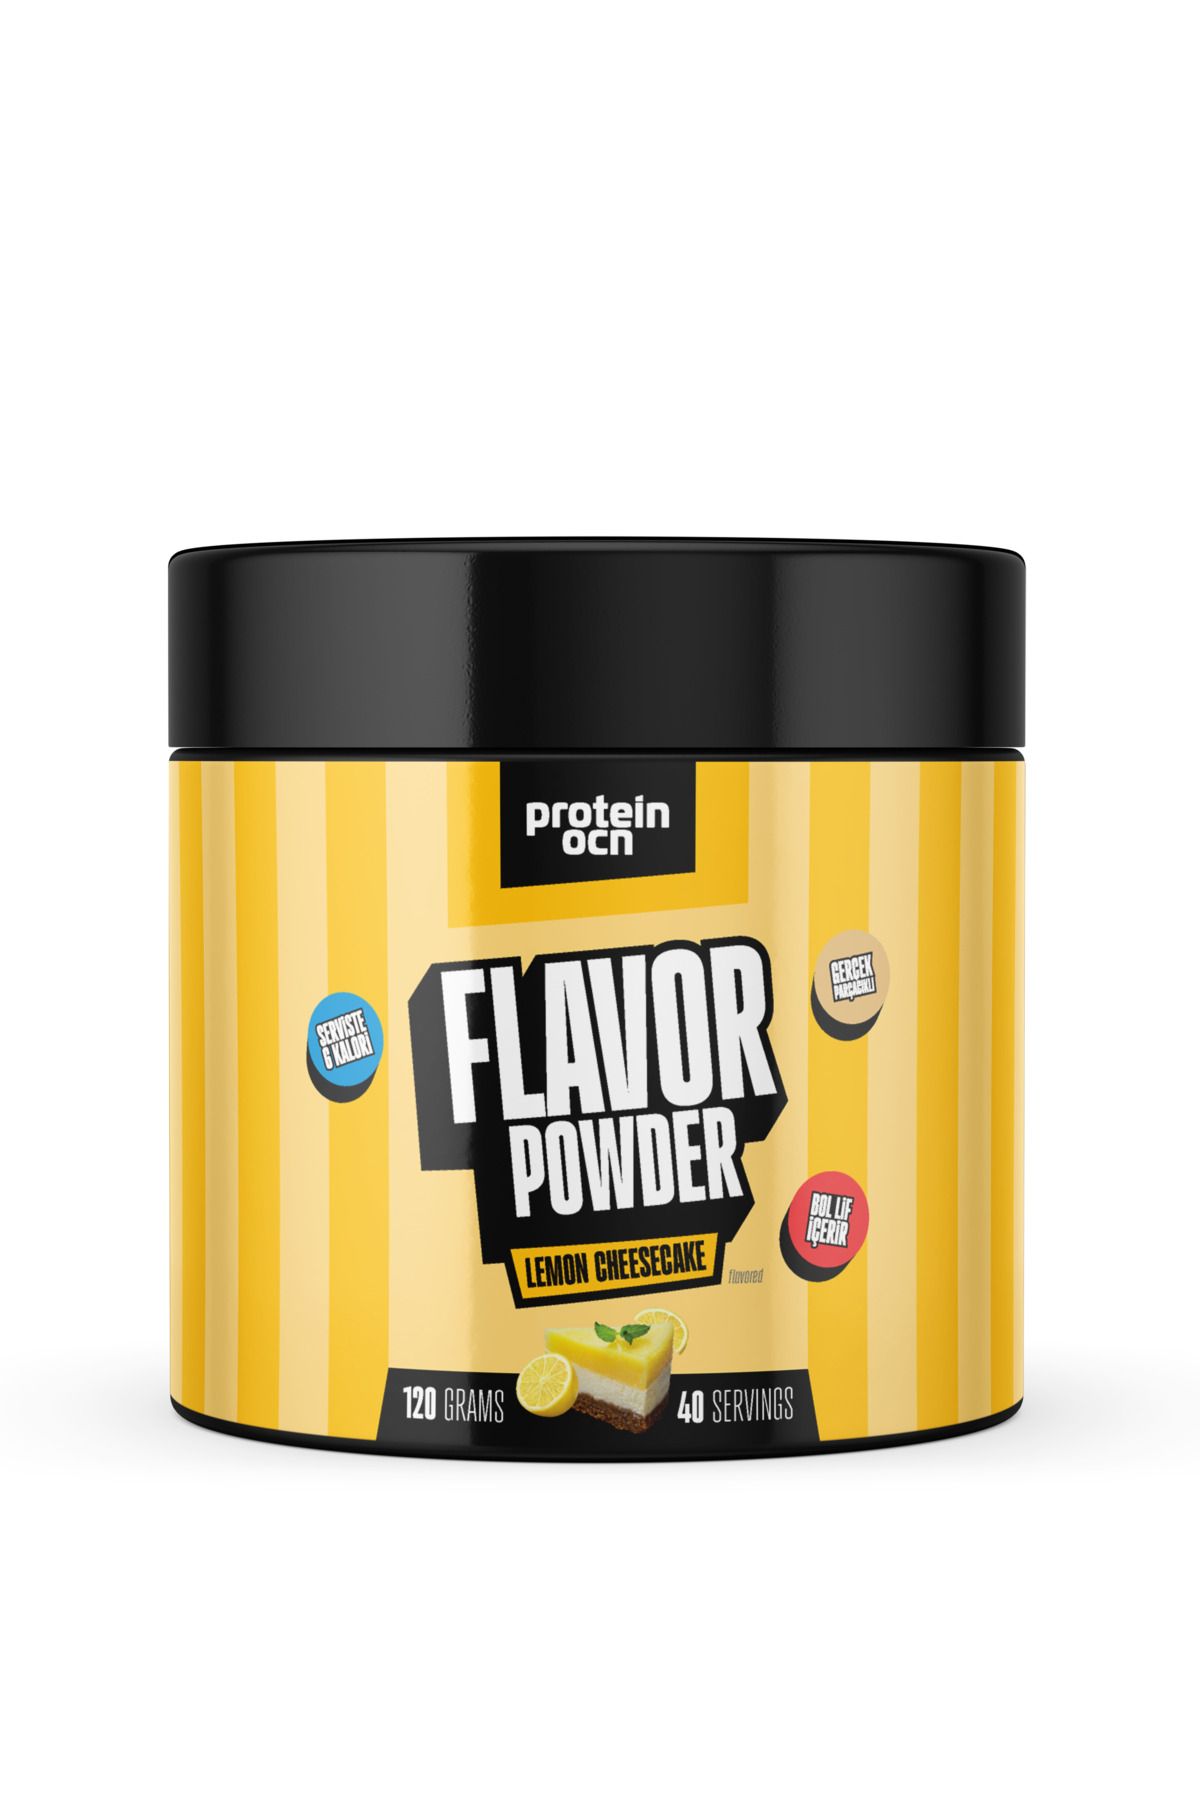 Proteinocean Flavor Powder - Lemon Cheesecake - 120g - 40 servis